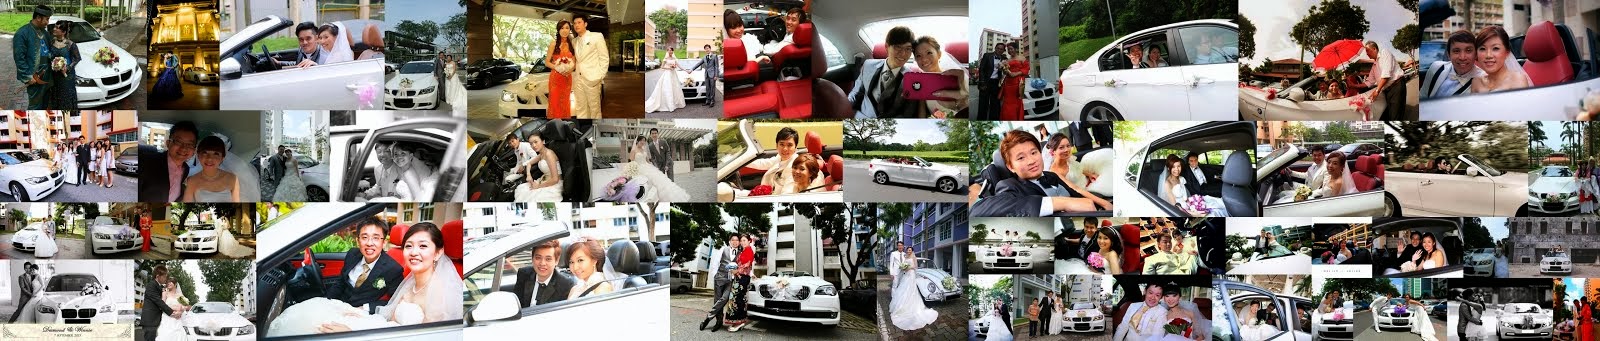 WHITE WEDDING CARS